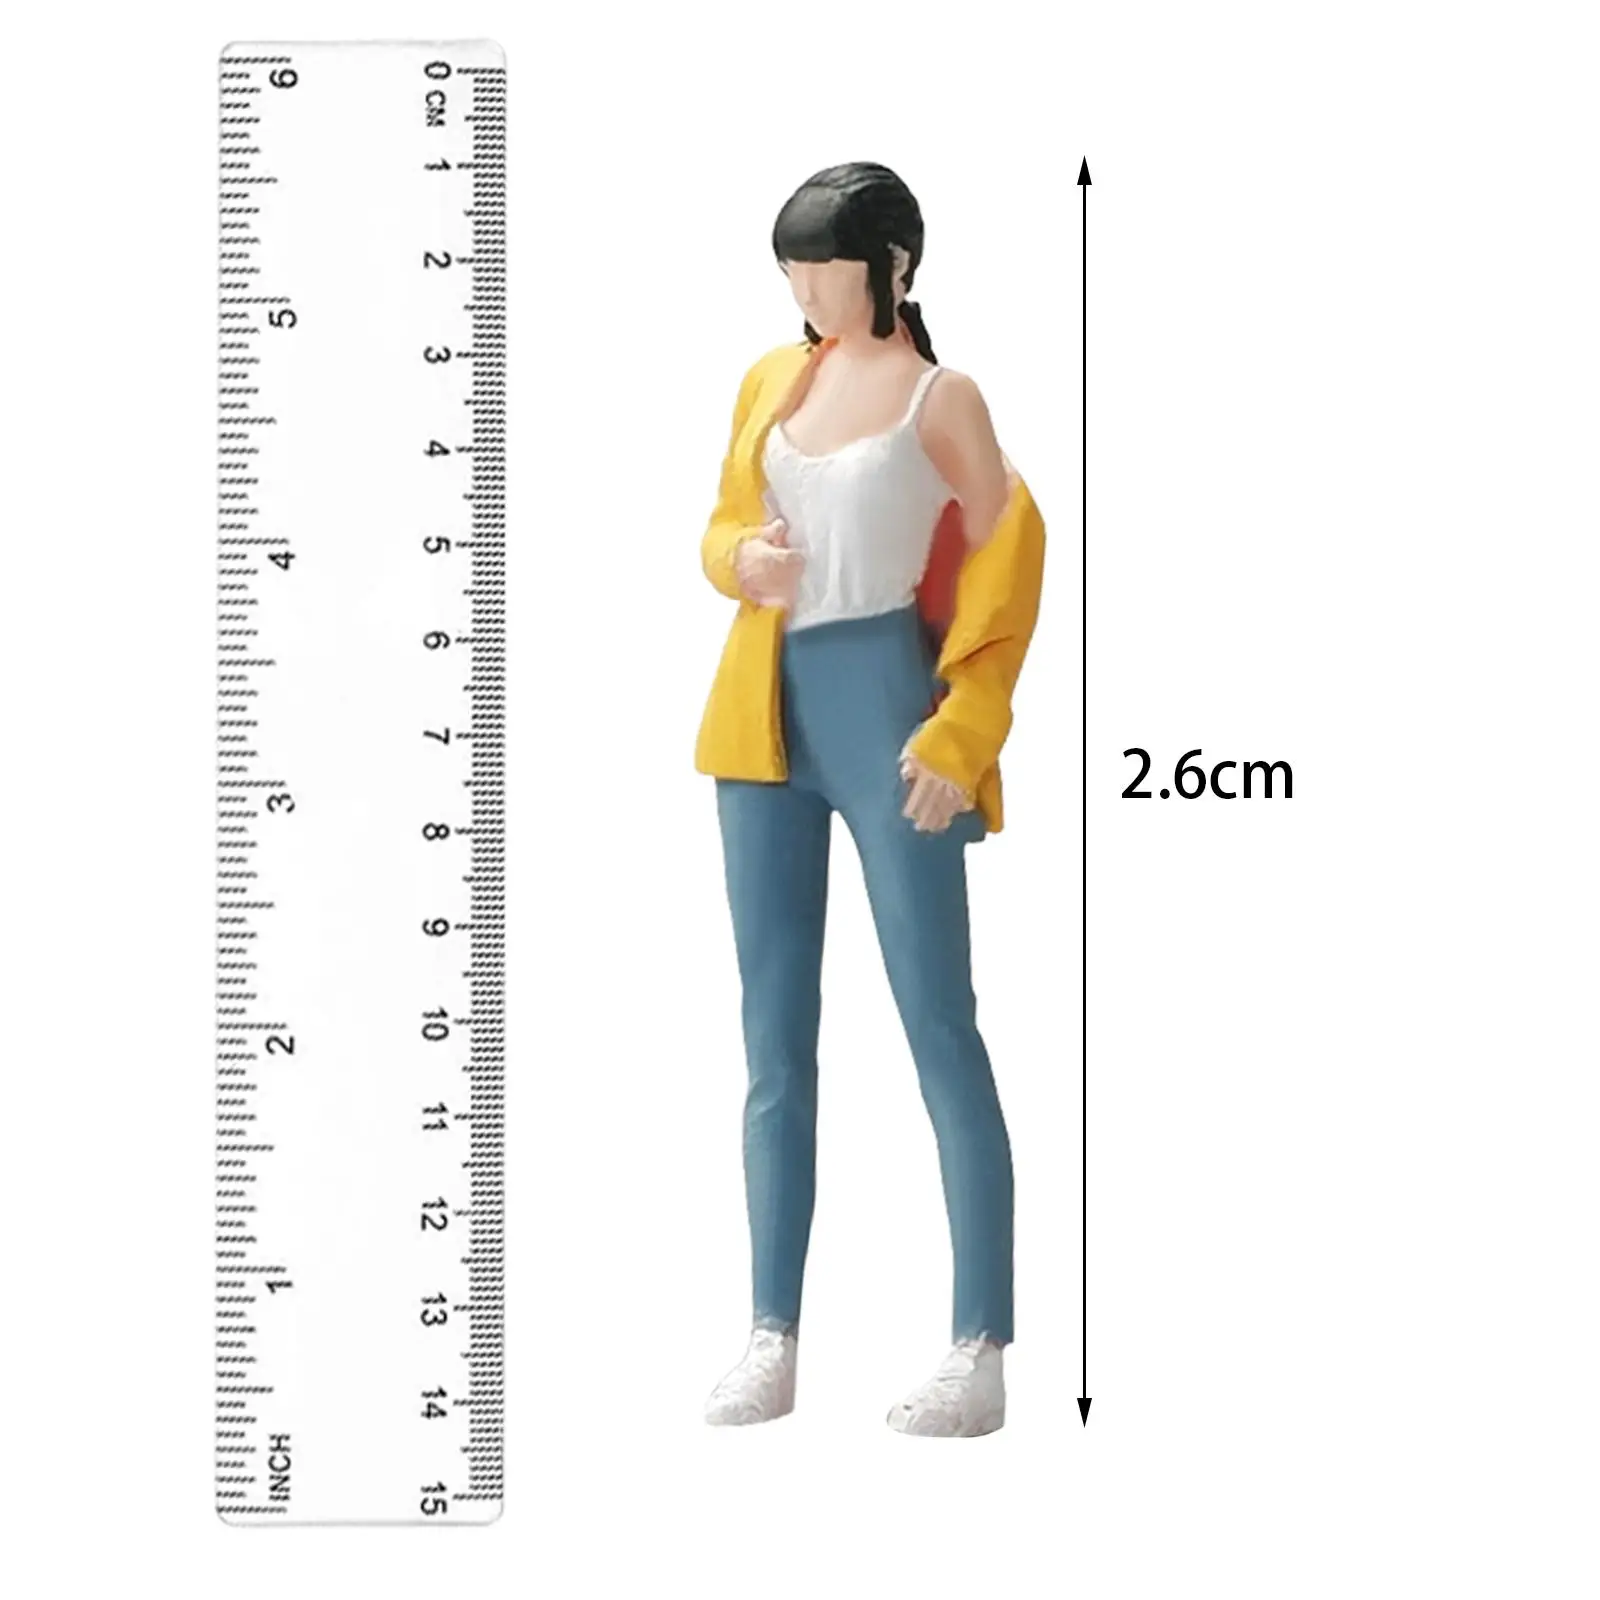 1:64 Girl Model Figure Pose Scene Character Woman Figurine Miniature People Model Handpainted DIY Scene Decor Diorama Layout